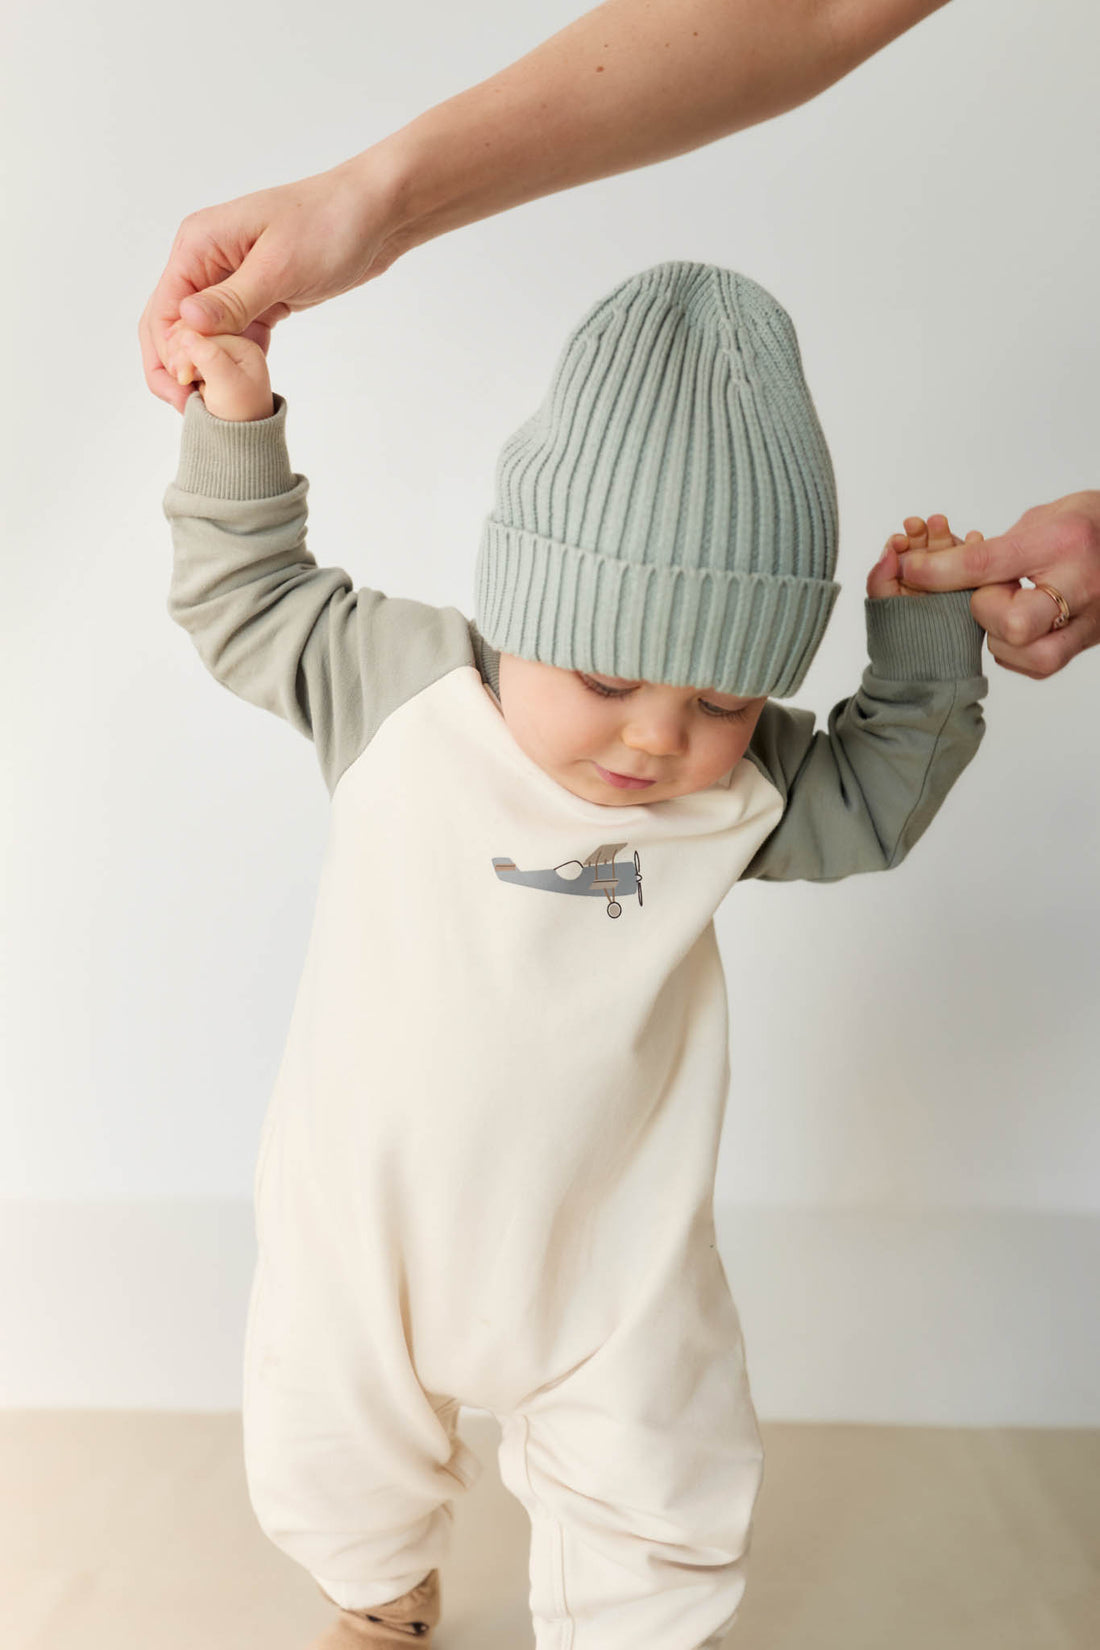 Organic Cotton Tao Sweatshirt Onepiece - Milford Sound Avion Childrens Onepiece from Jamie Kay NZ